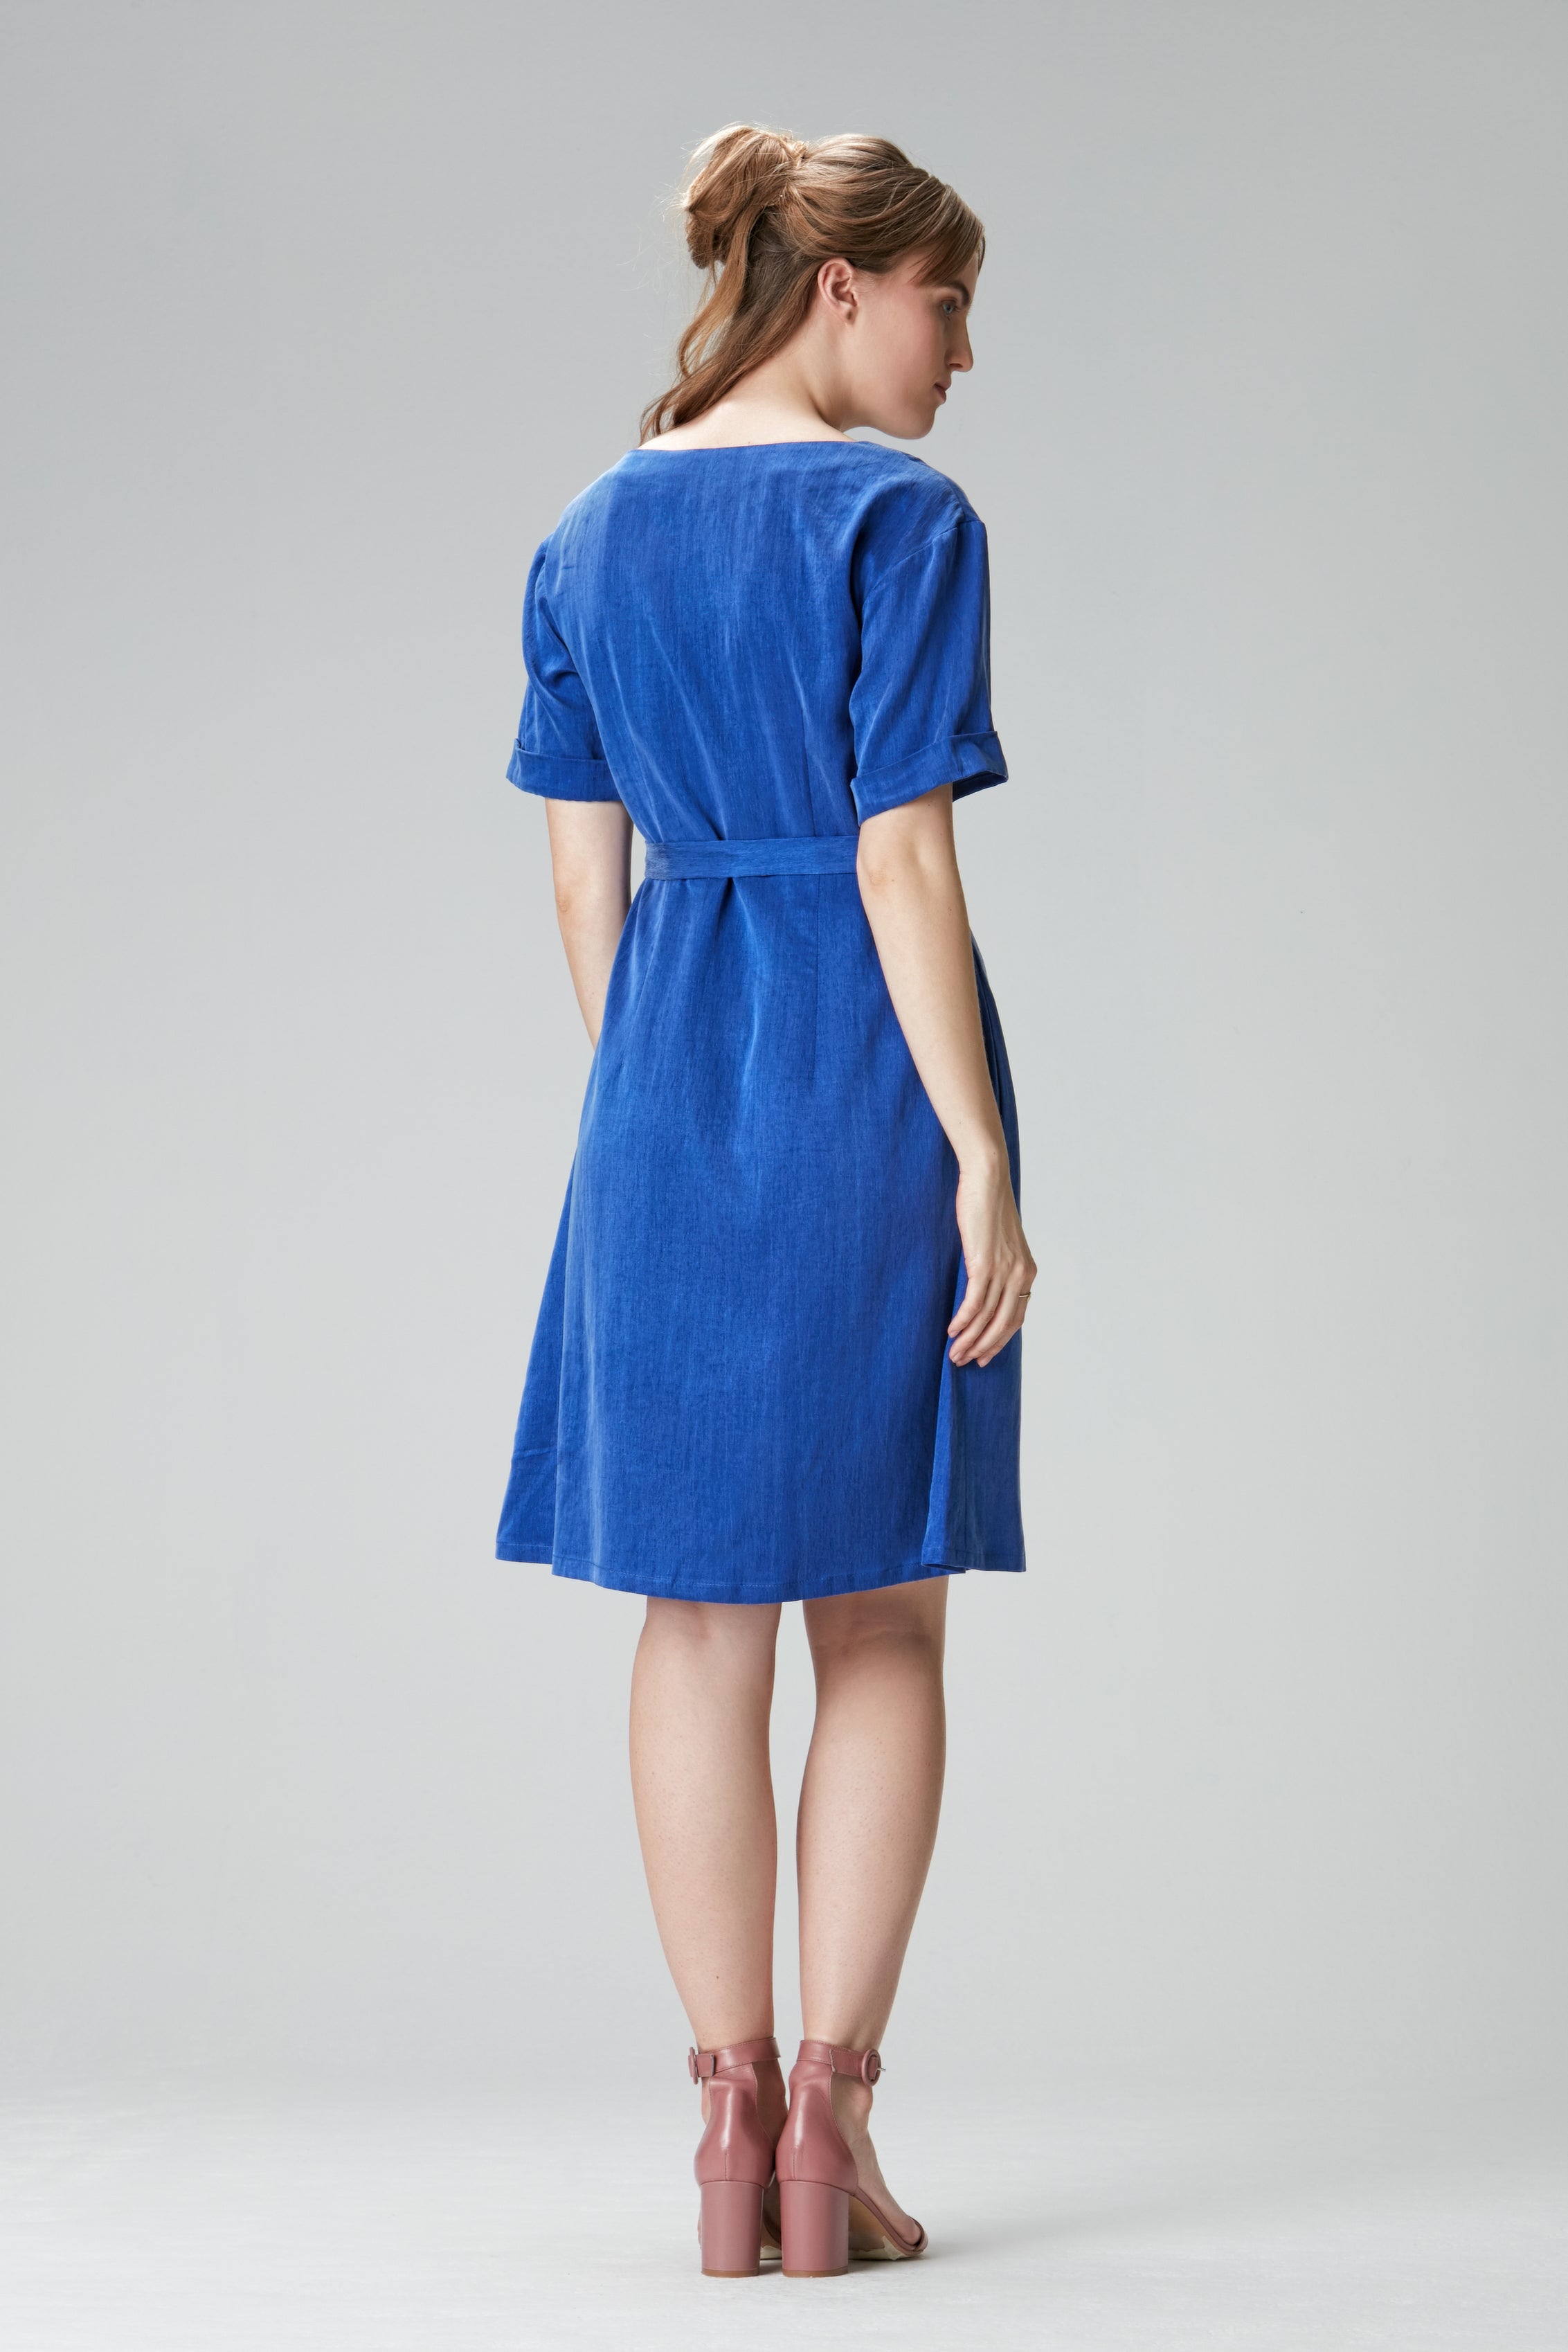 Blaues Sommerkleid mit Ärmeln "MI-LAA" aus Bemberg Cupro